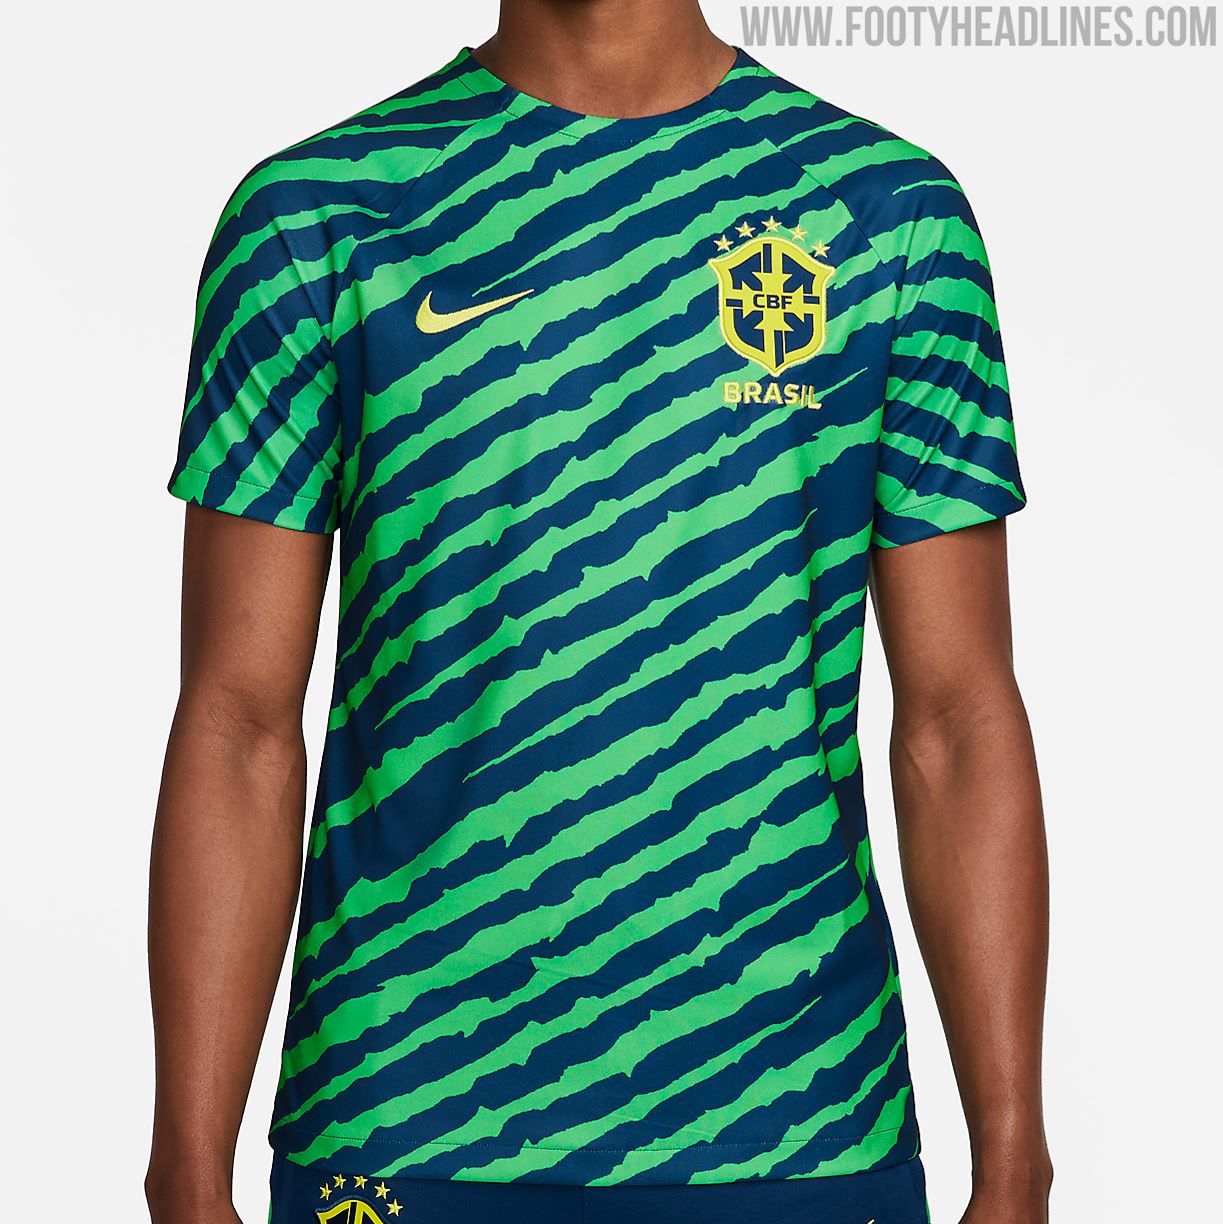 Brazil 2022 World Cup Pre-Match Shirt Leaked - Footy Headlines